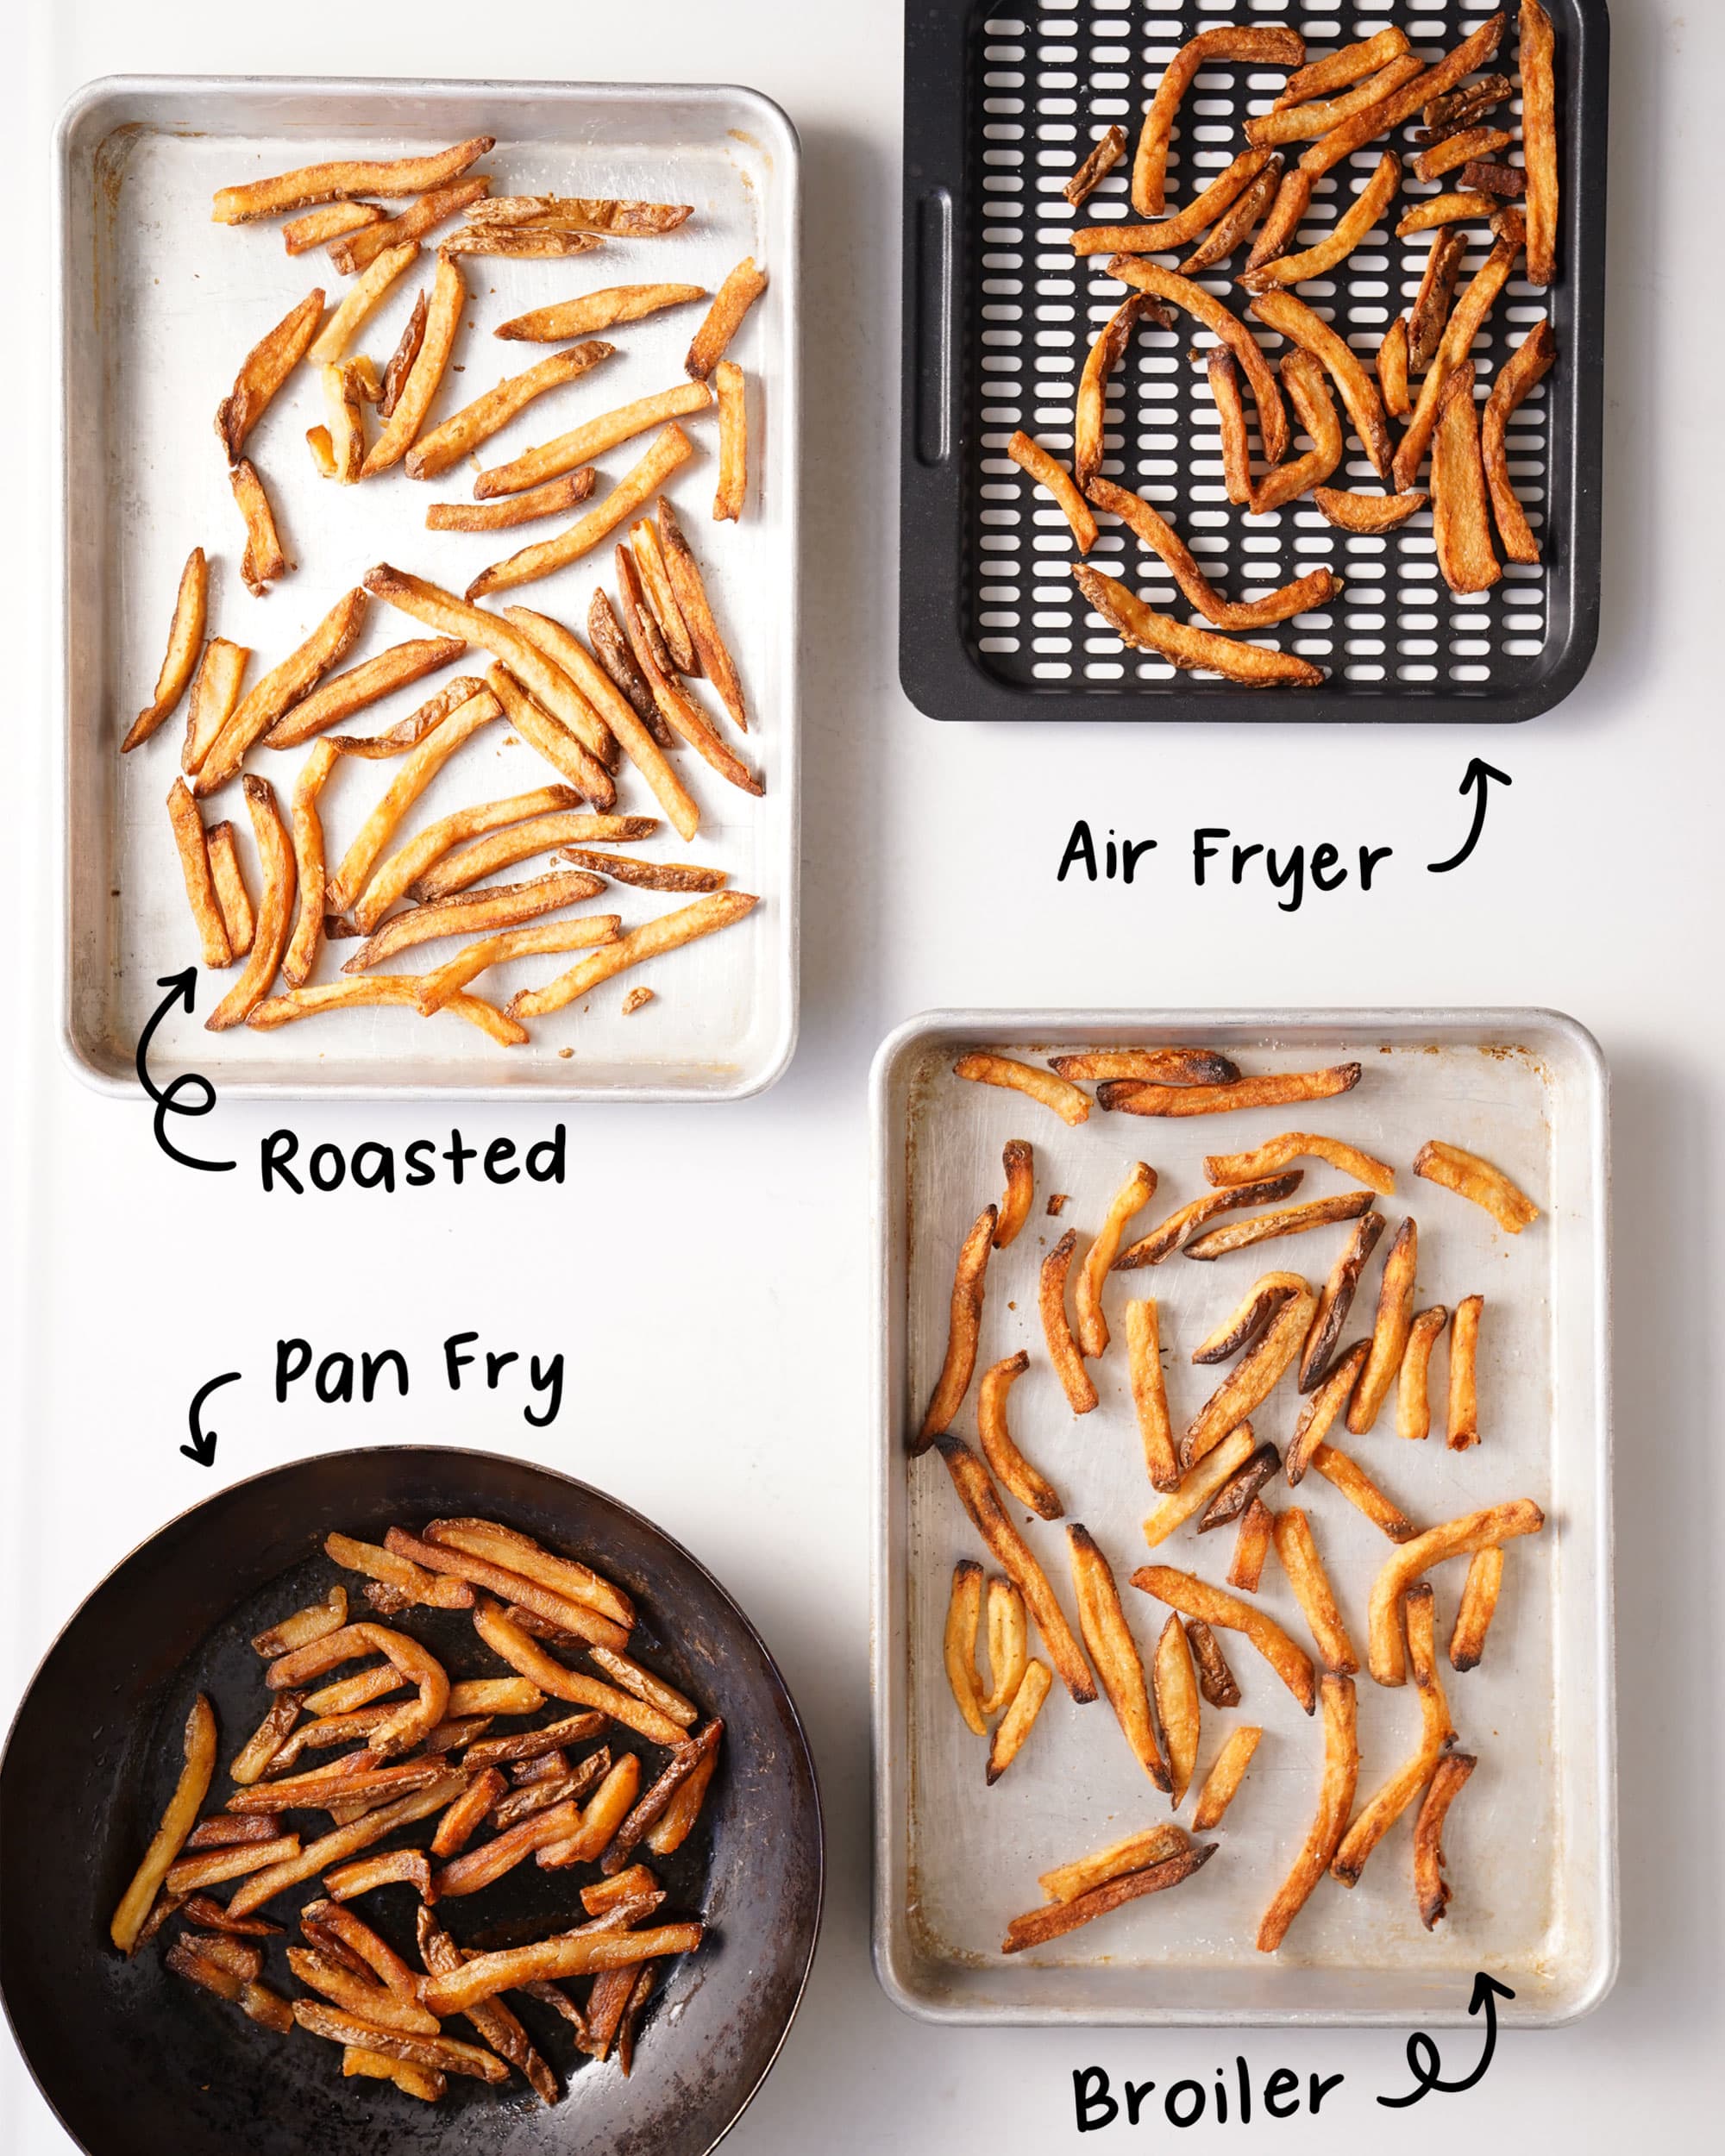 https://cdn.apartmenttherapy.info/image/upload/v1605567601/k/Photo/Series/2020-11-Skills-Showdown-Best-Way-to-Reheat-French-fries/french-fry-skills-inpost.jpg